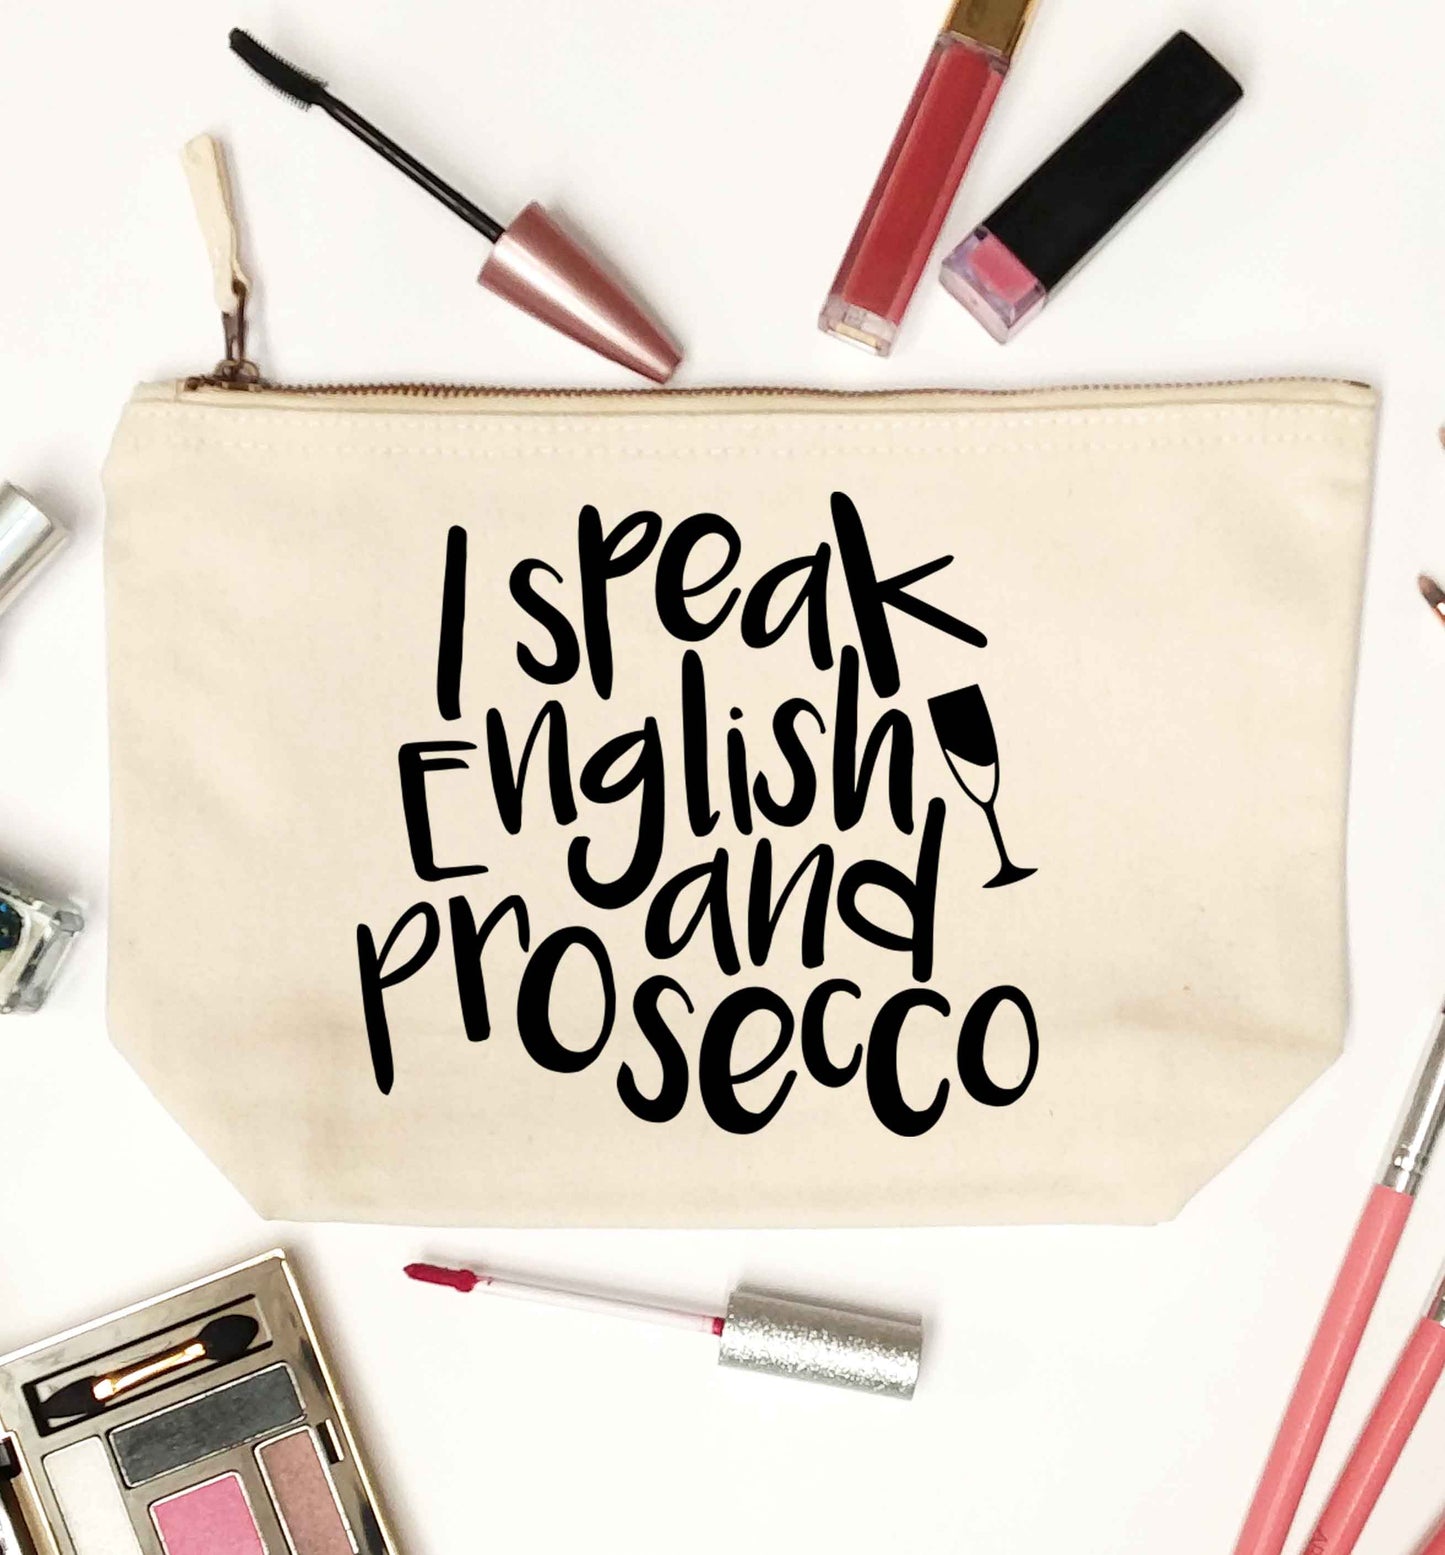 I speak English and prosecco natural makeup bag